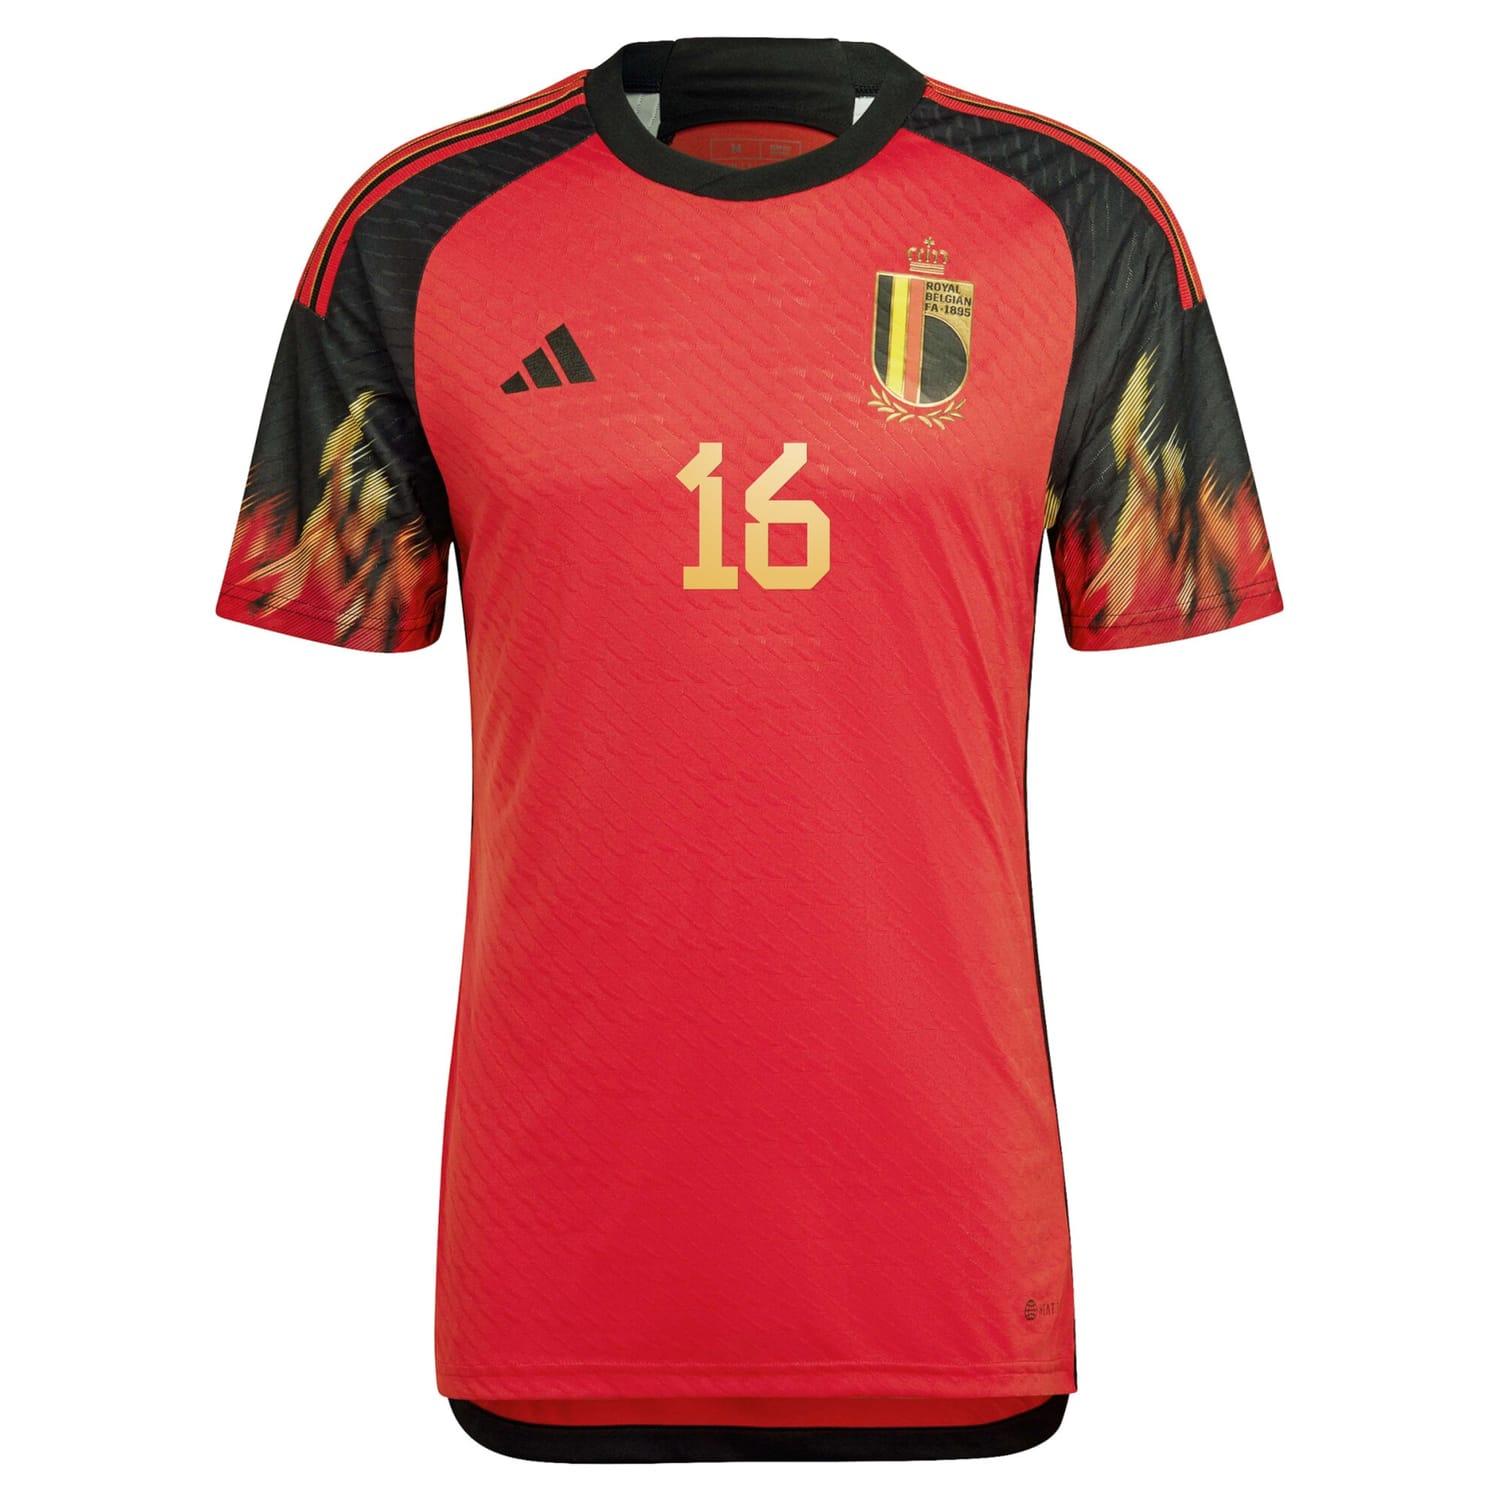 Belgium National Team Home Authentic Jersey Shirt 2022 player Thorgan Hazard 16 printing for Men